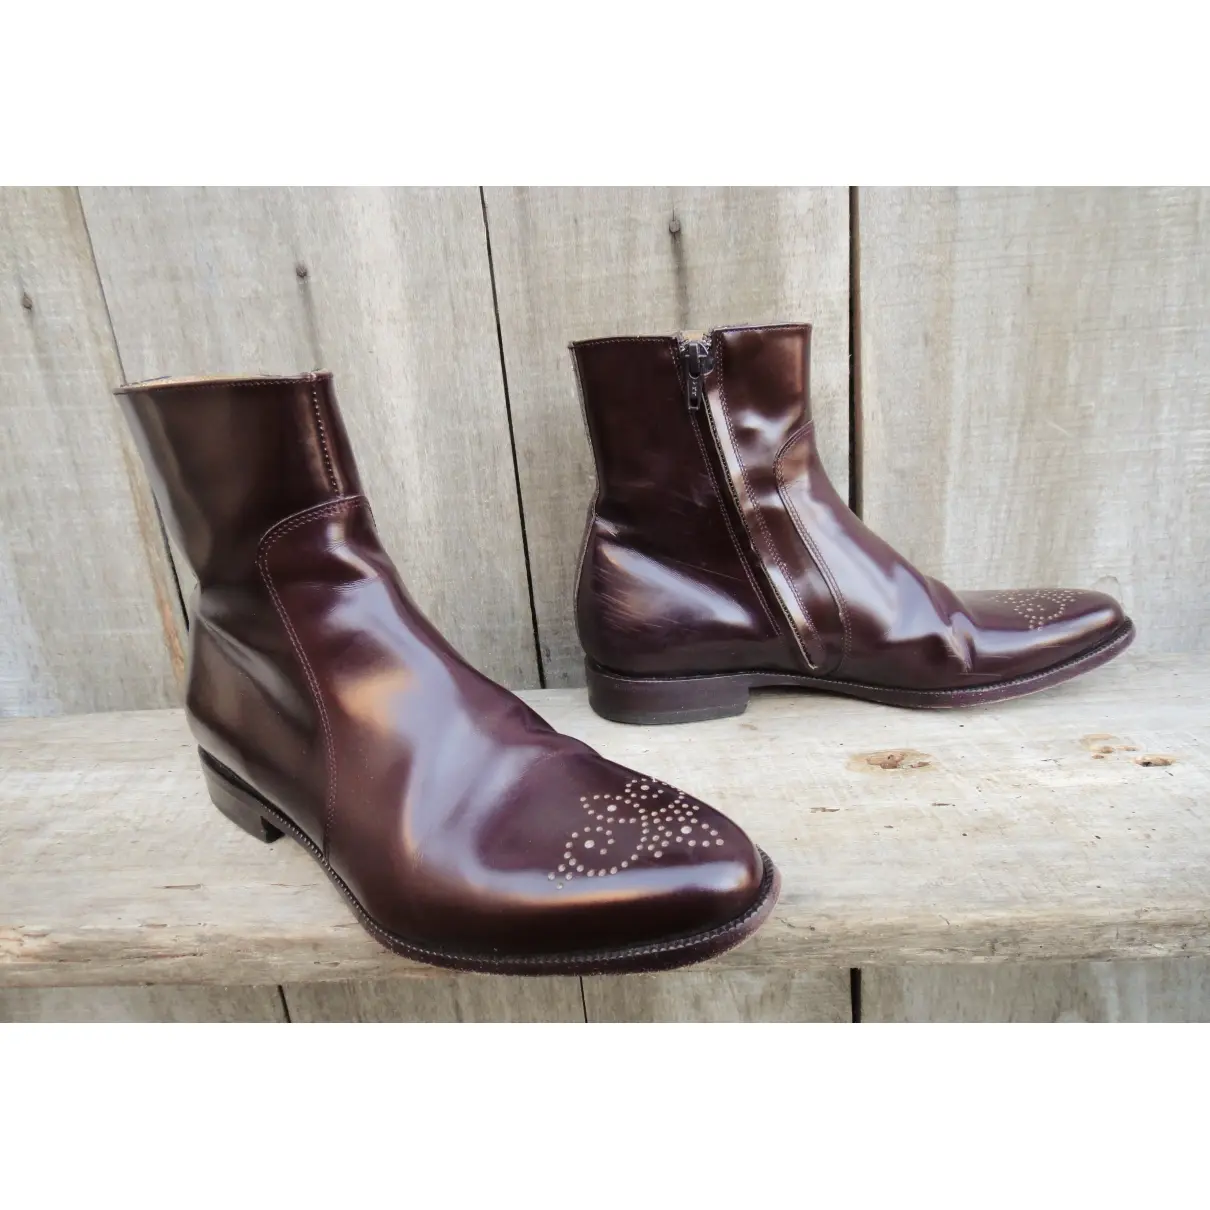 Maison Martin Margiela Patent leather ankle boots for sale - Vintage